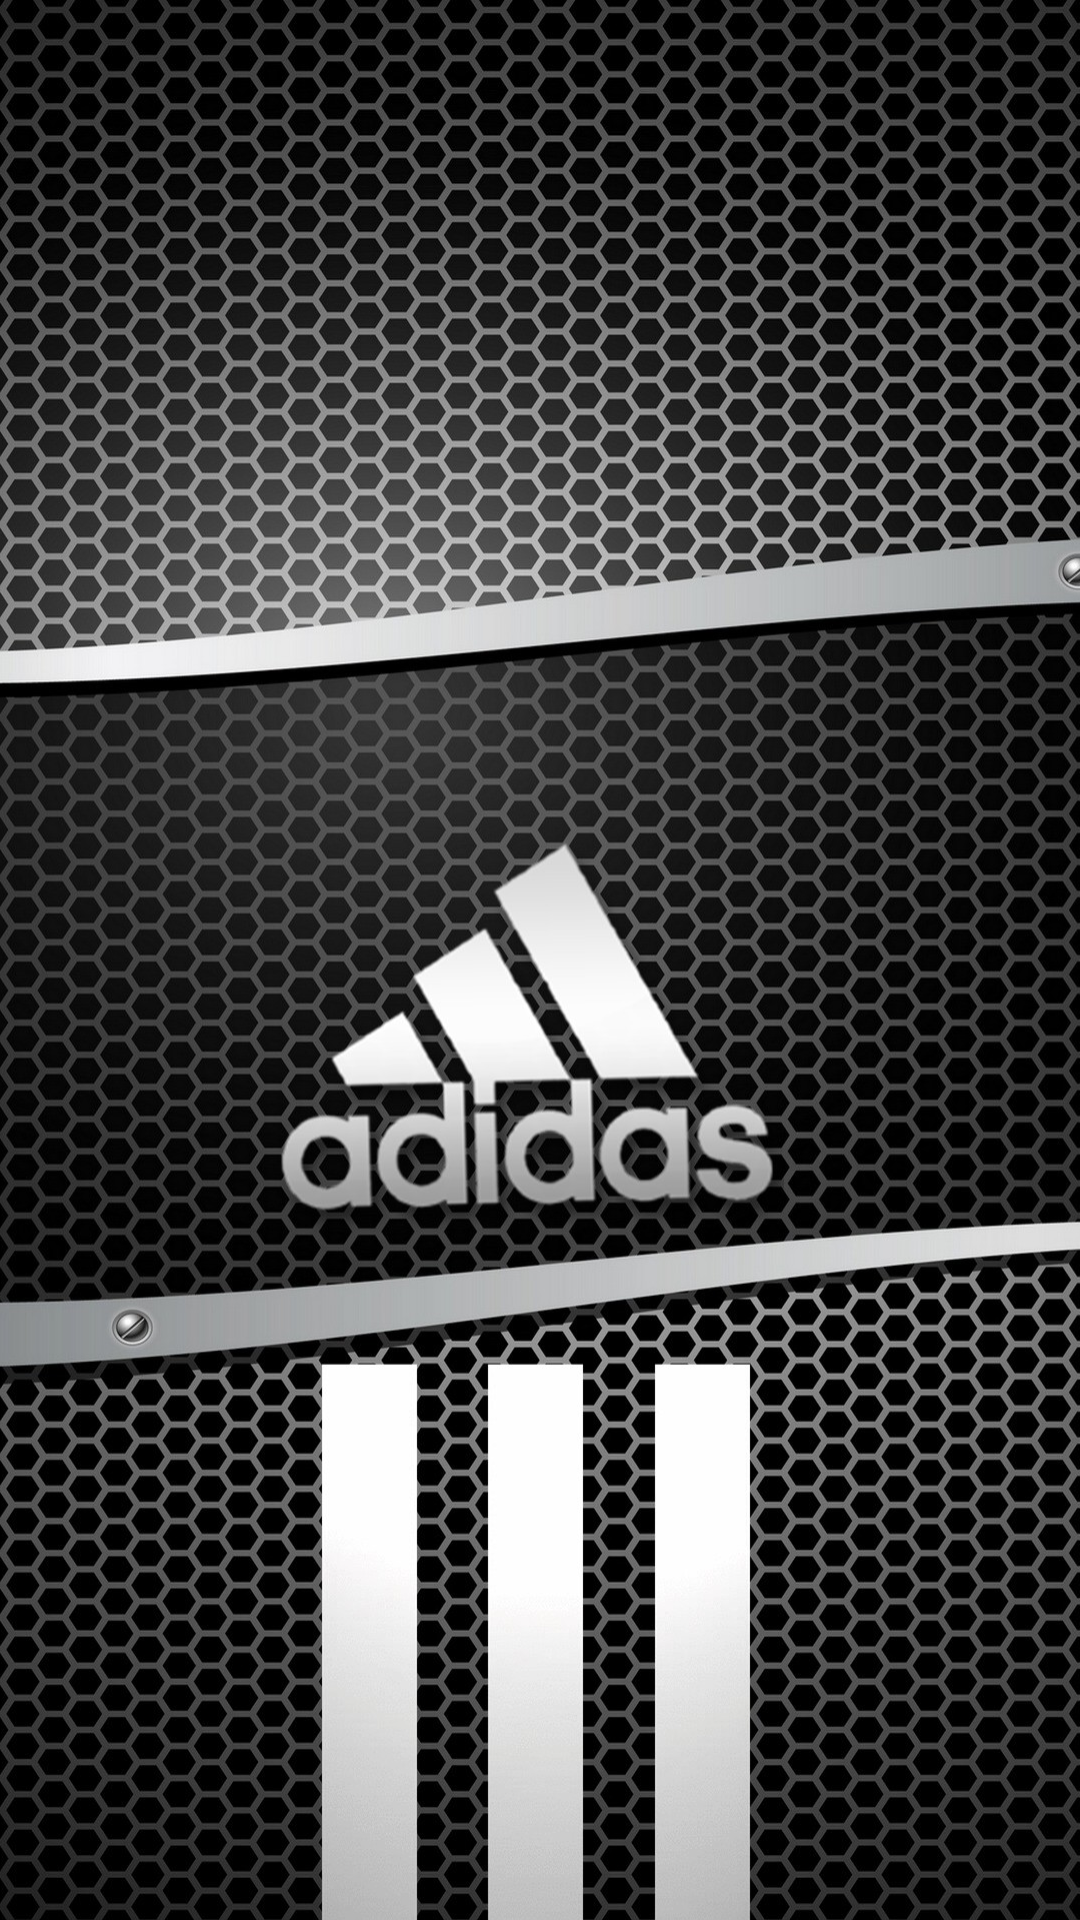 Adidas phone wallpapers